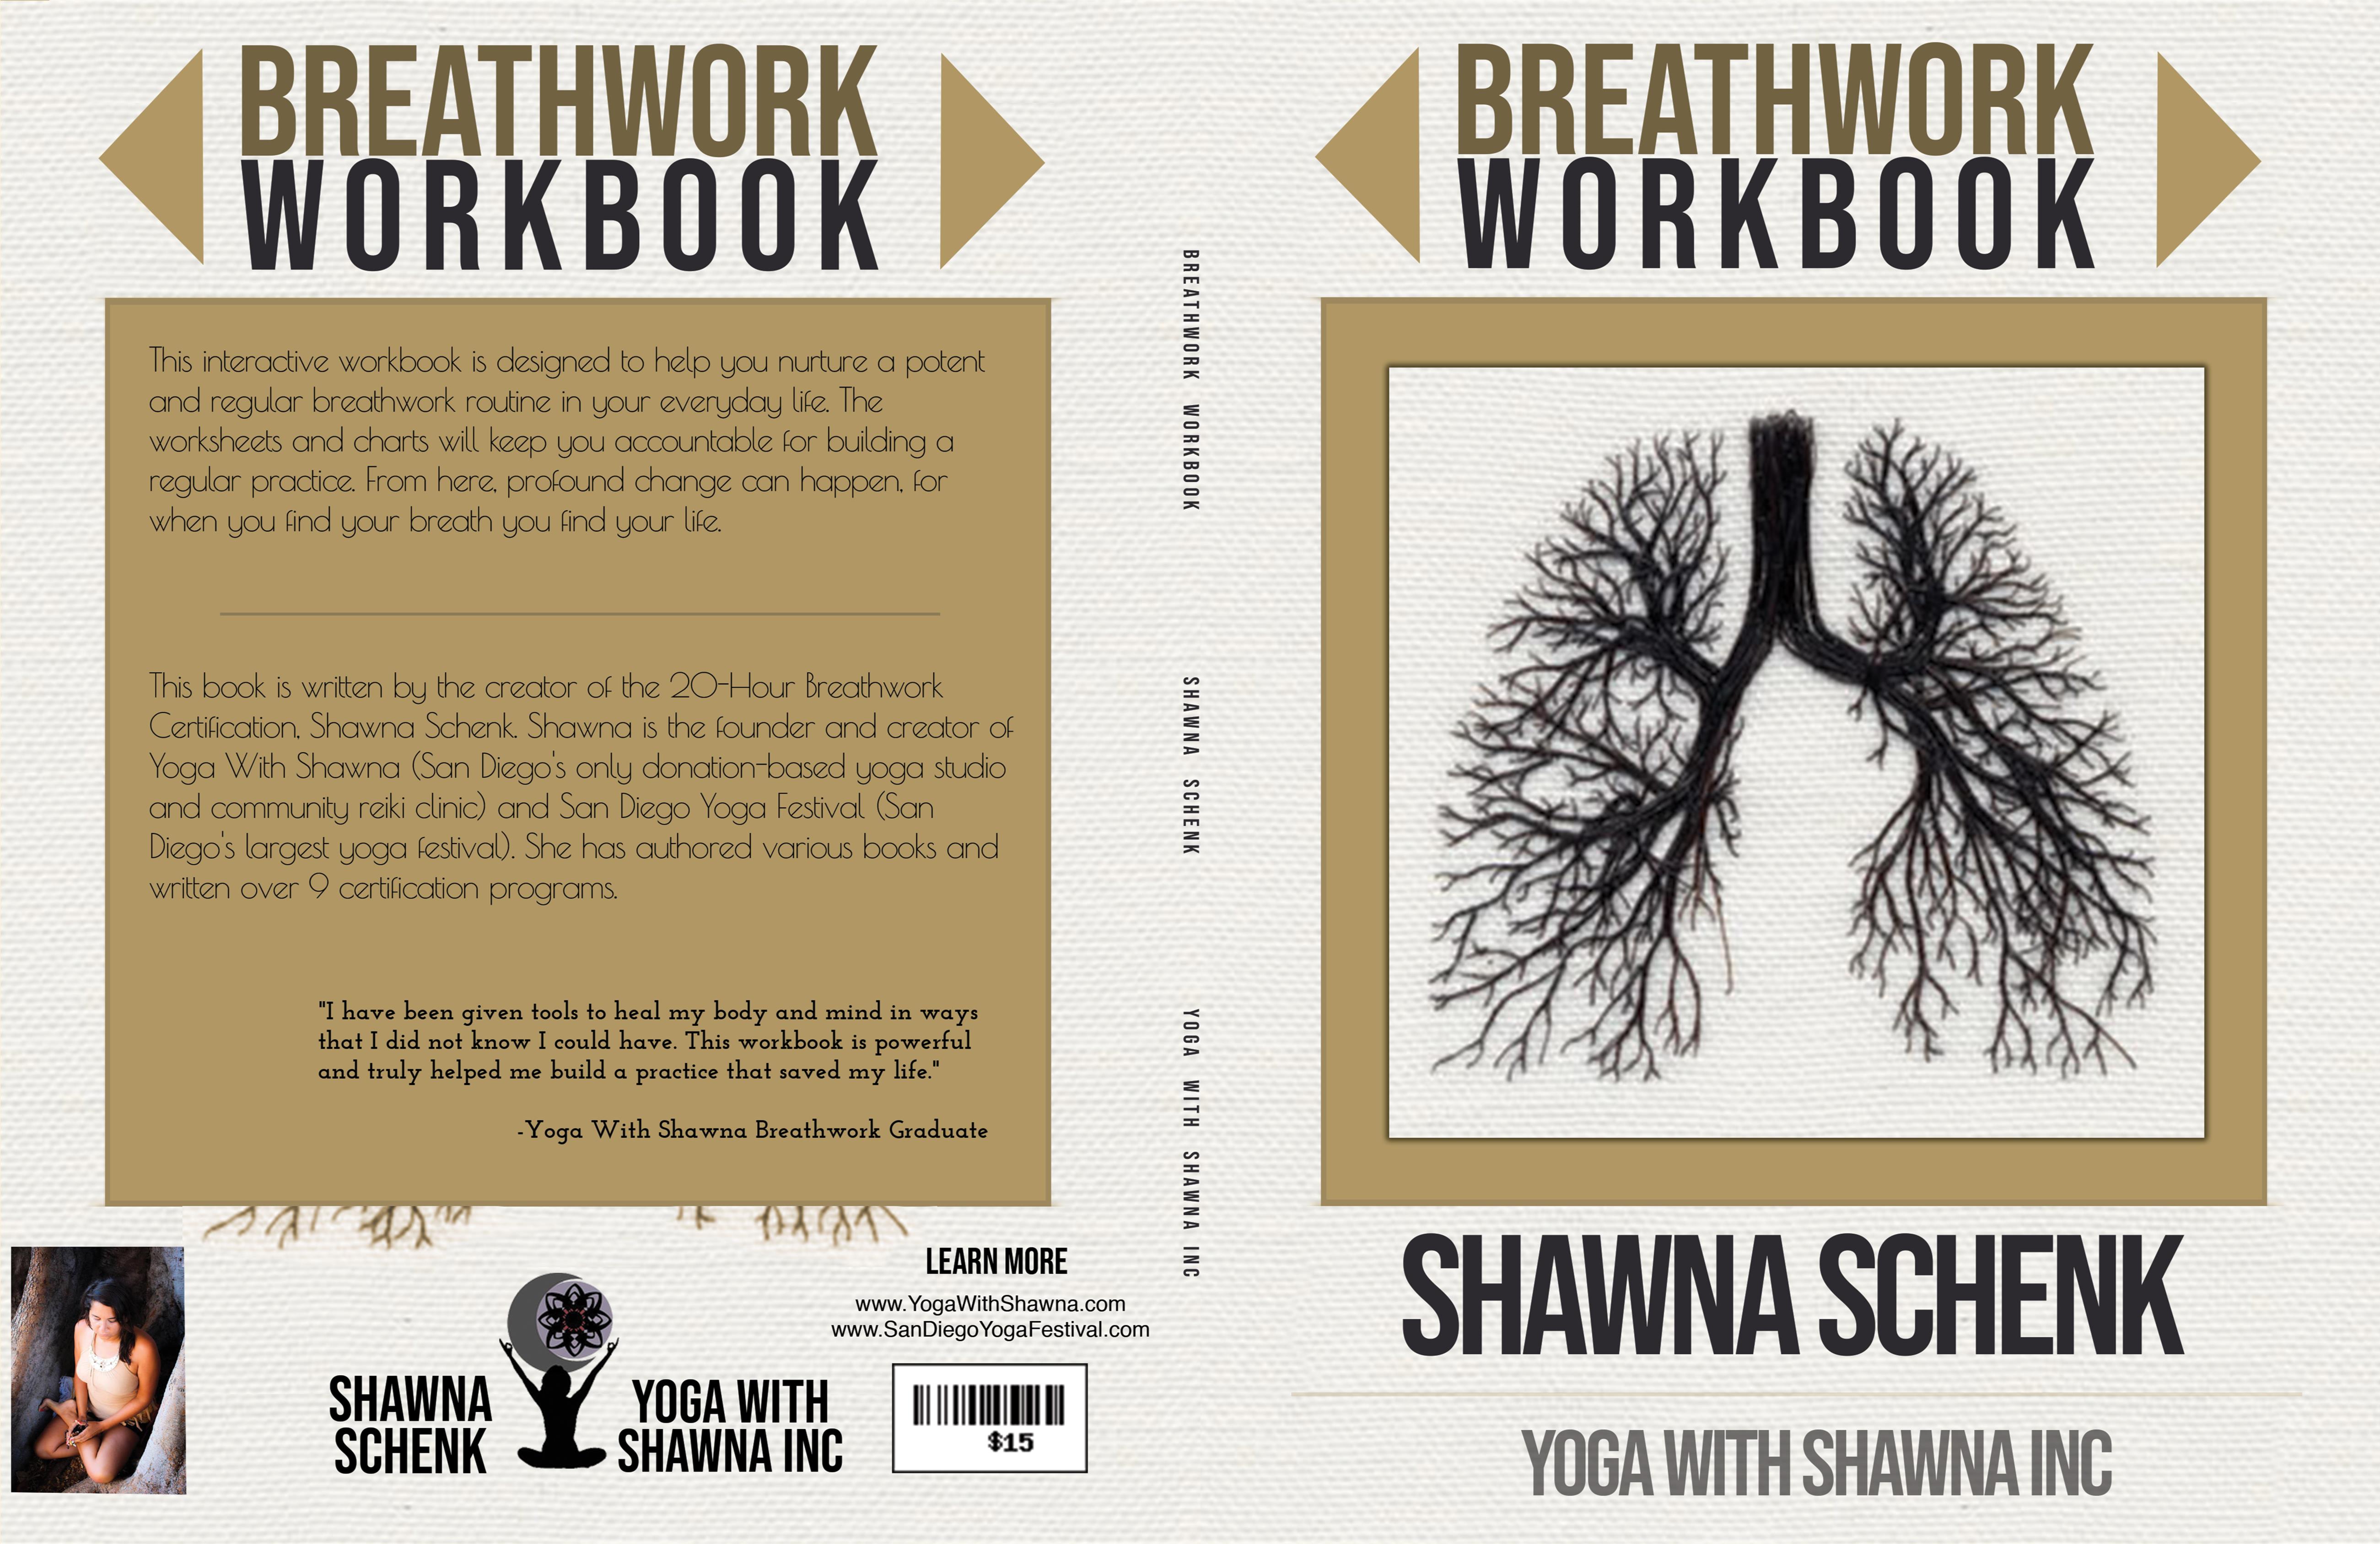 Breathwork Workbook cover image